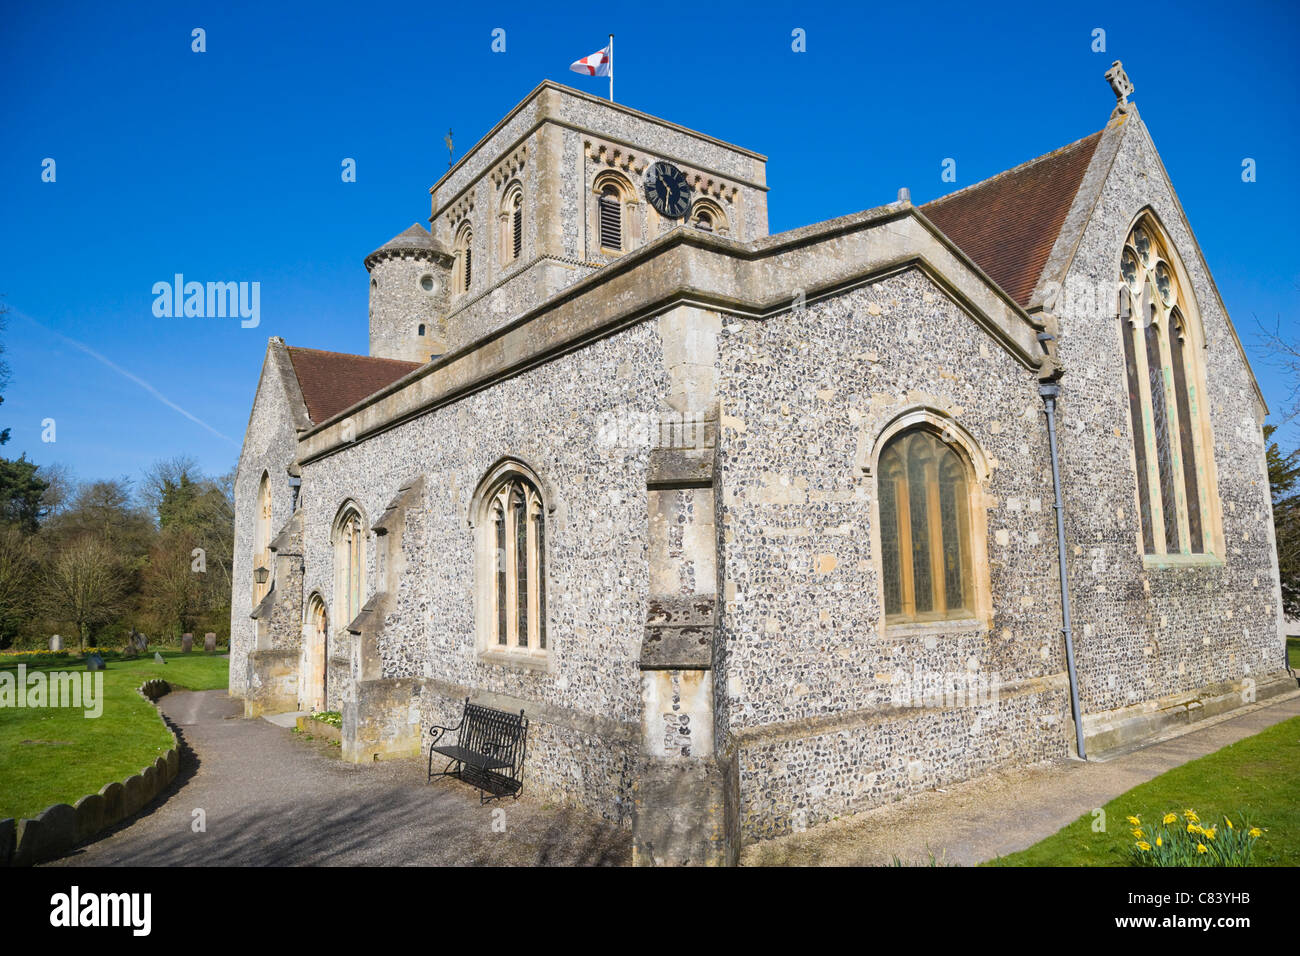 St Mary's Church, Kingsclere, Hampshire, England, UK Stock Photo